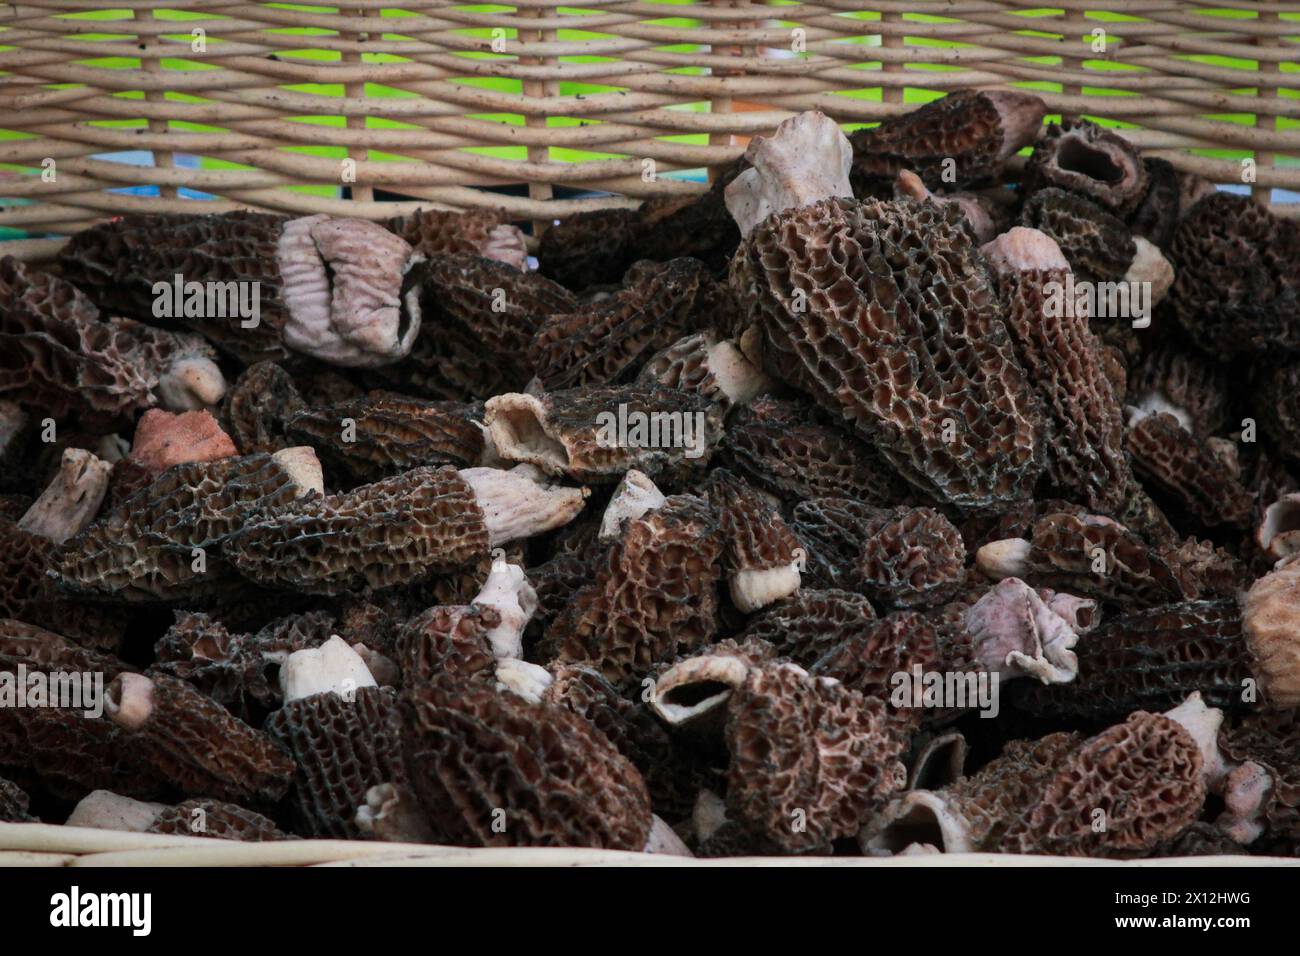 Basket brimming with freshly foraged morel mushrooms Stock Photo